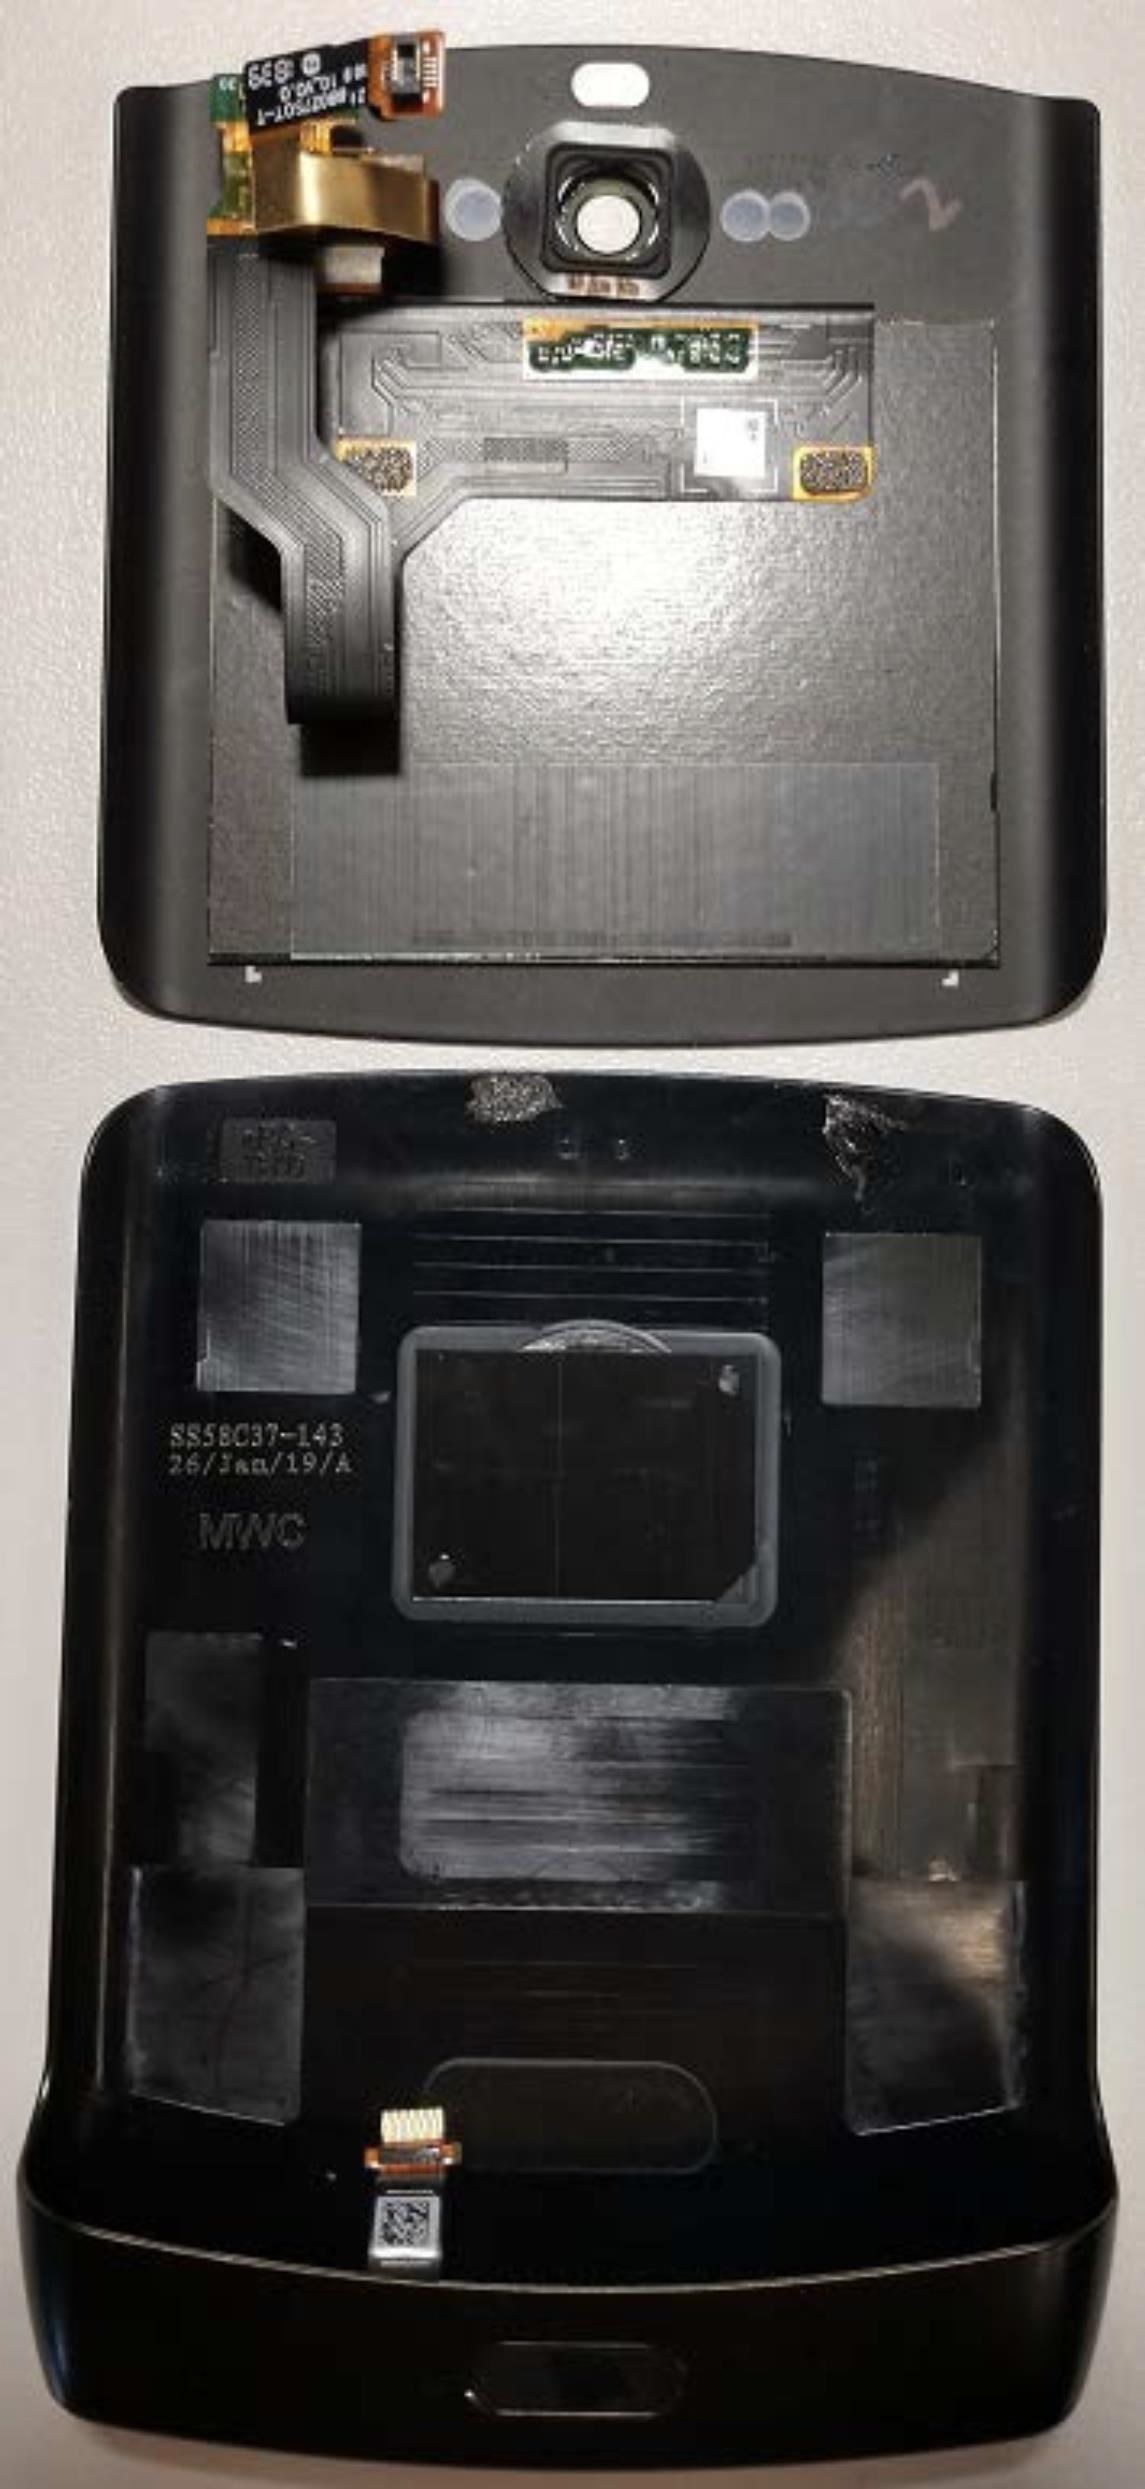 New Photos of the 2019 Motorola RAZR Surface in FCC Filing, Reveal Dimensions, Notch & Biometrics